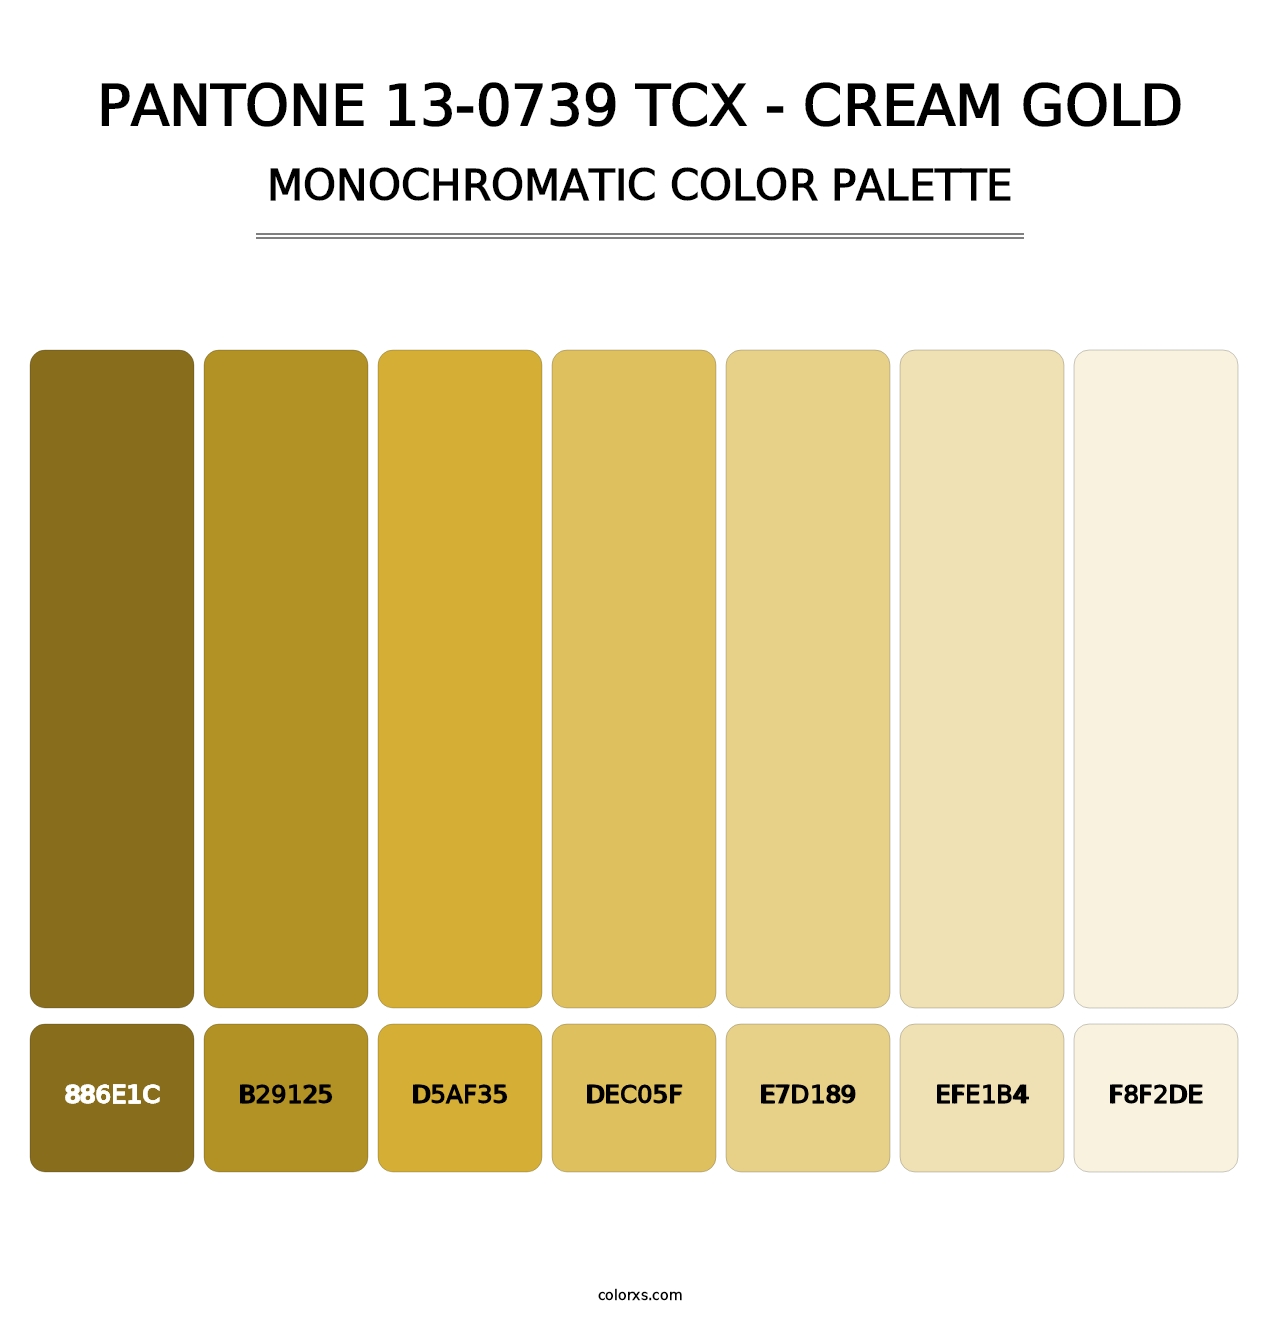 PANTONE 13-0739 TCX - Cream Gold - Monochromatic Color Palette